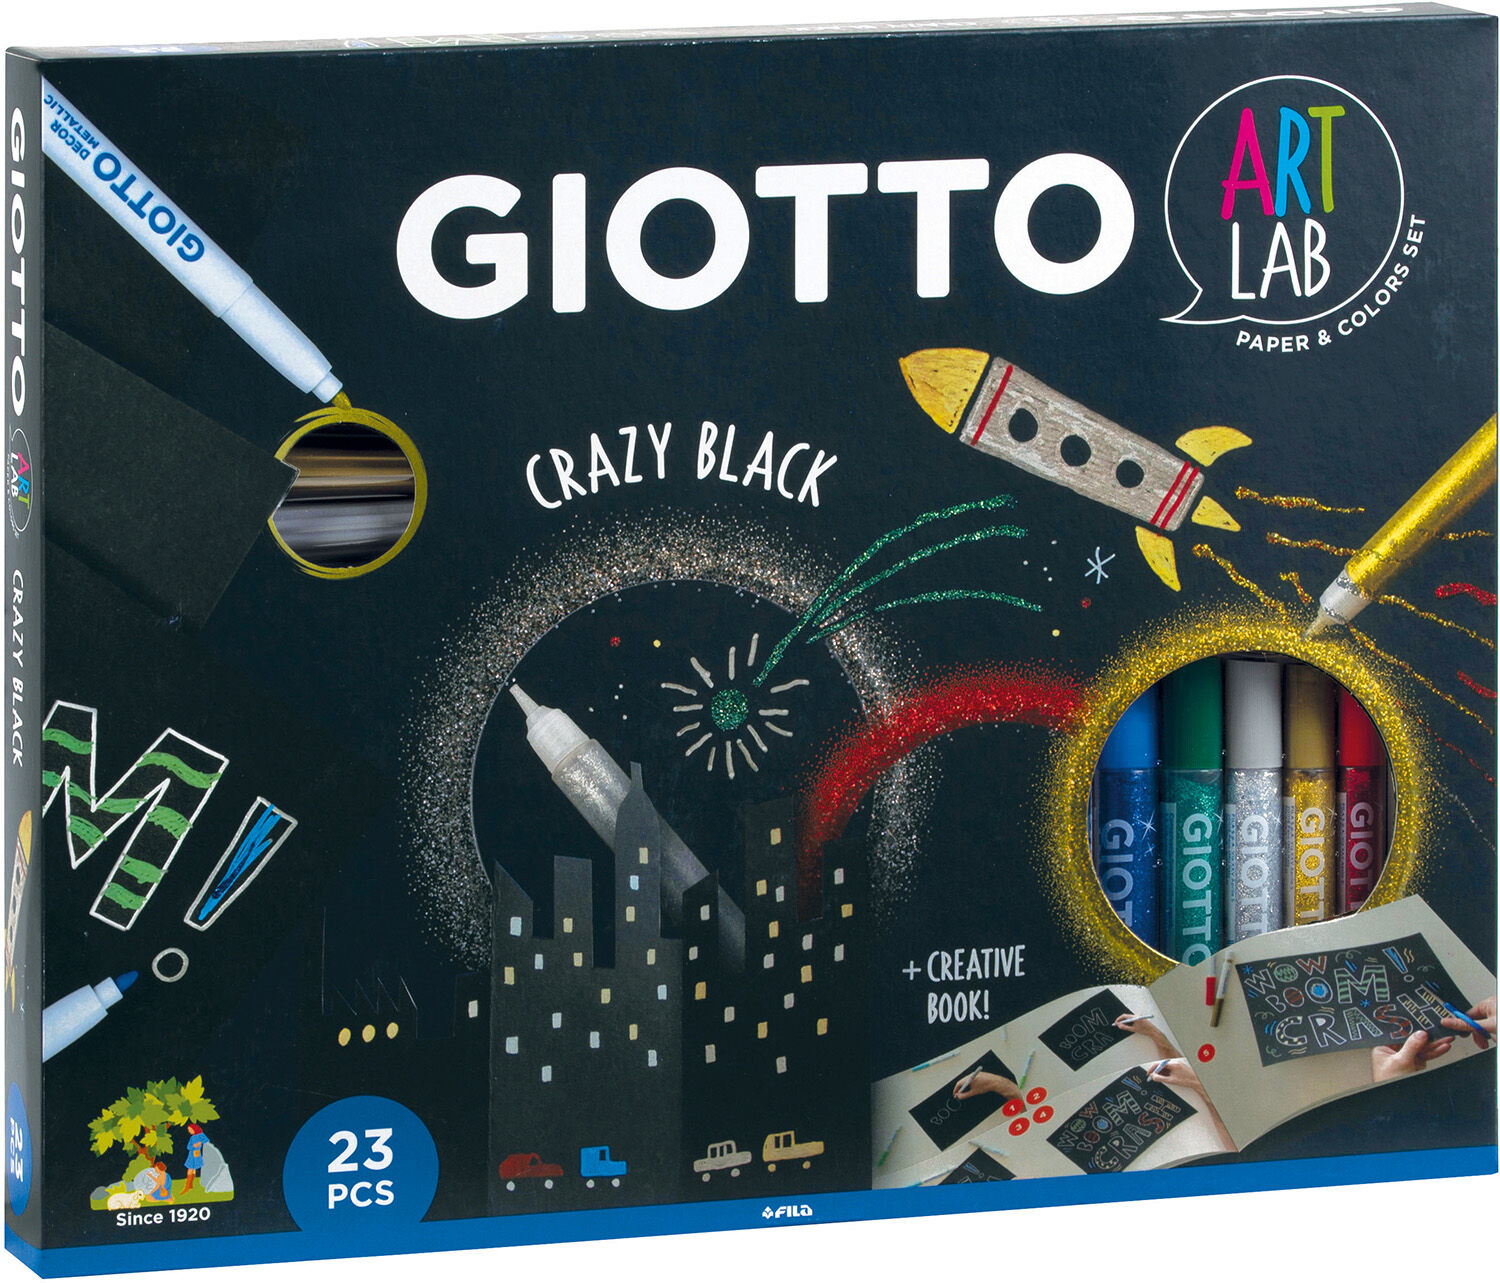 Giotto Art Lab Målarbok Crazy Black